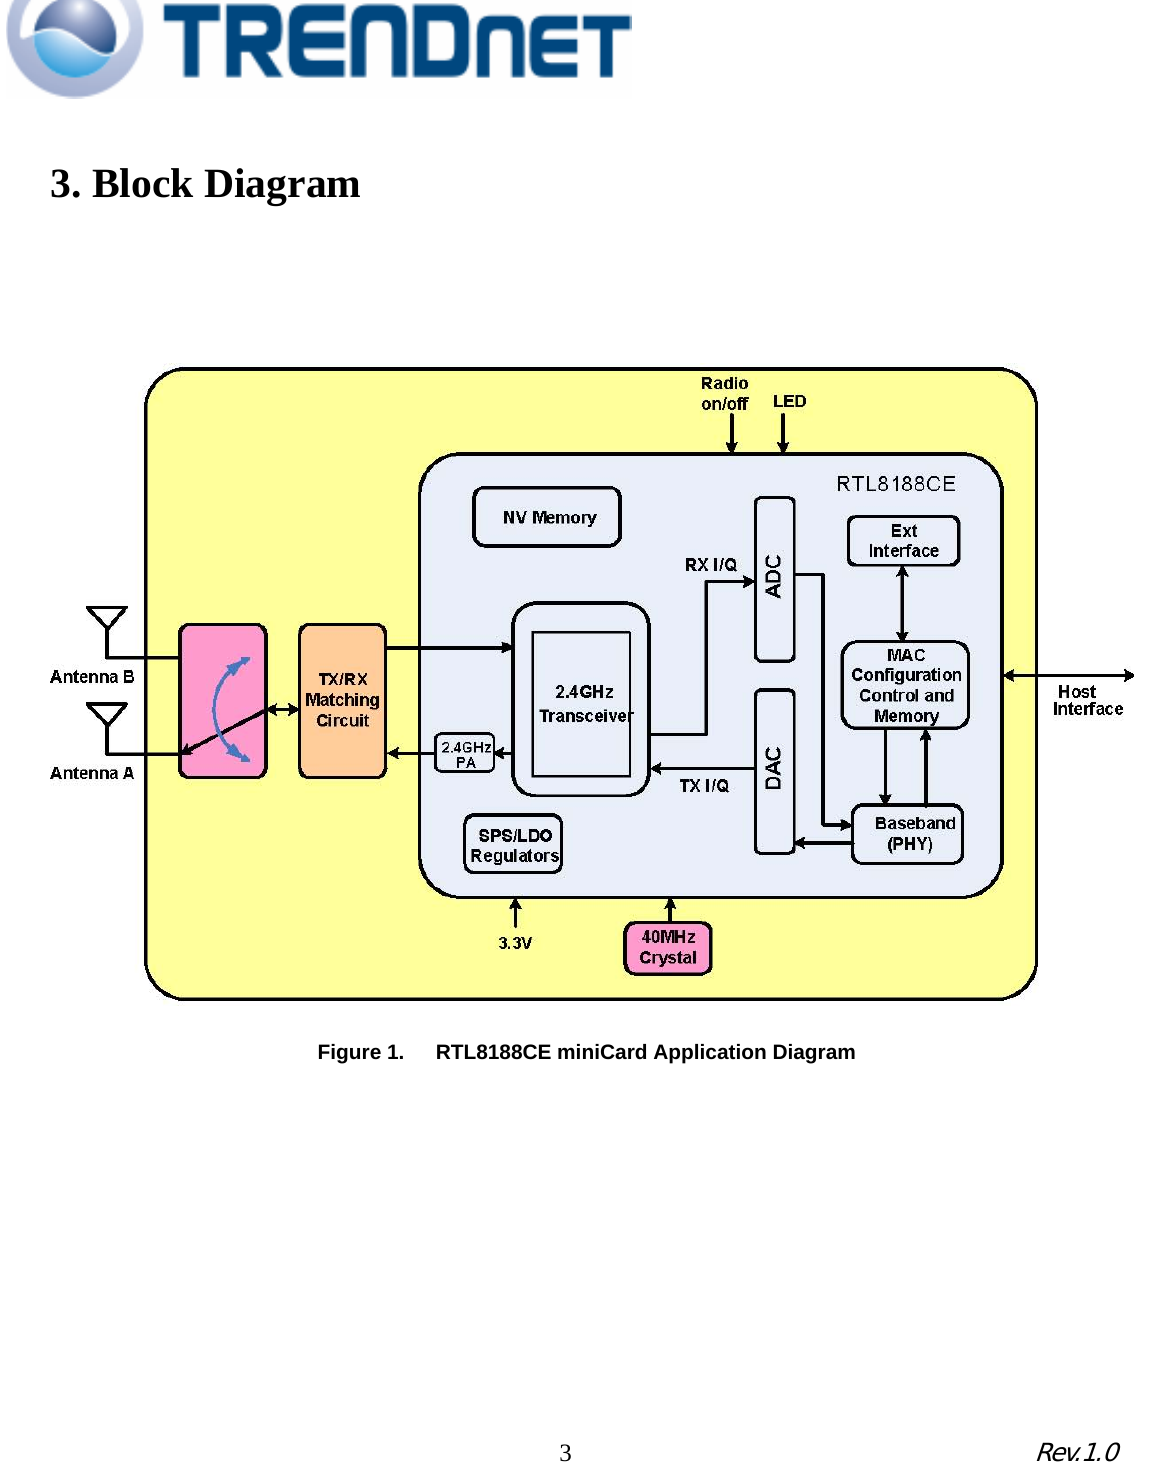                                                                                                                                           3. Block Diagram             Figure 1.      RTL8188CE miniCard Application Diagram                                                                                                             3             Rev.1.0   